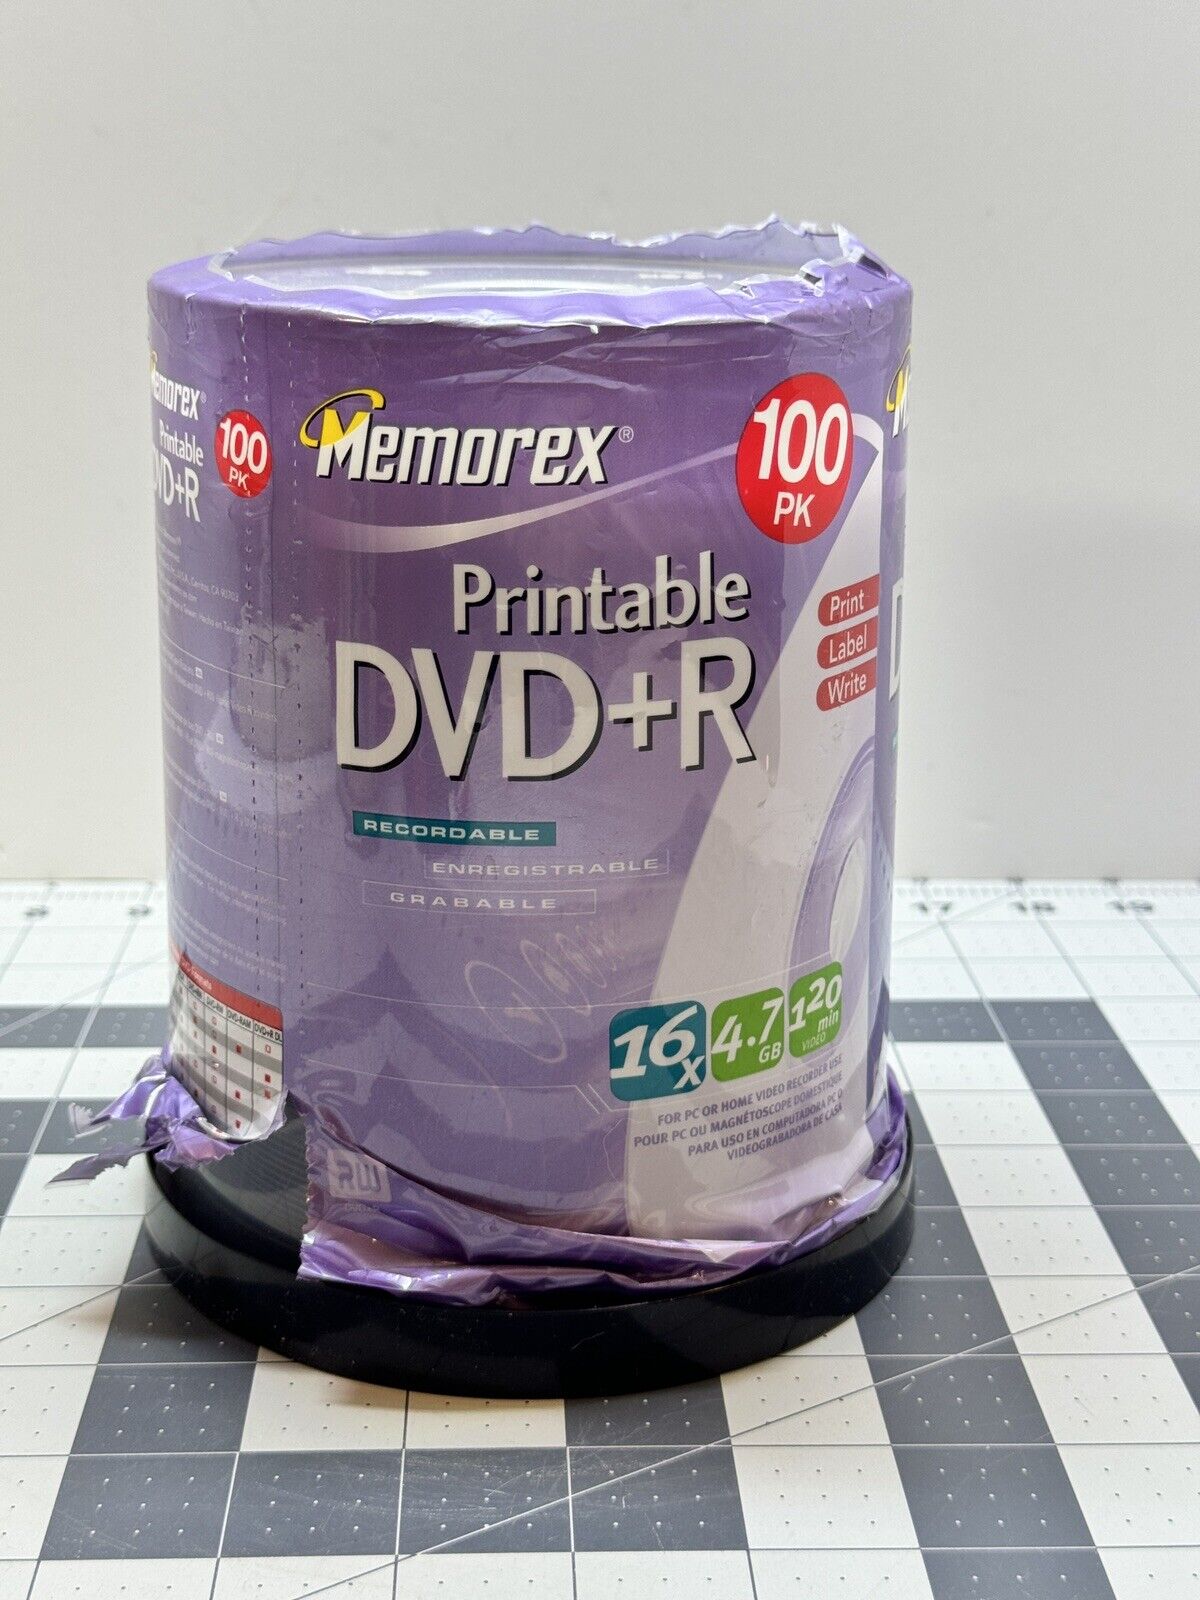 MEMOREX Printable DVD+R 16X 4.7 GB 120 Min Lot of 90